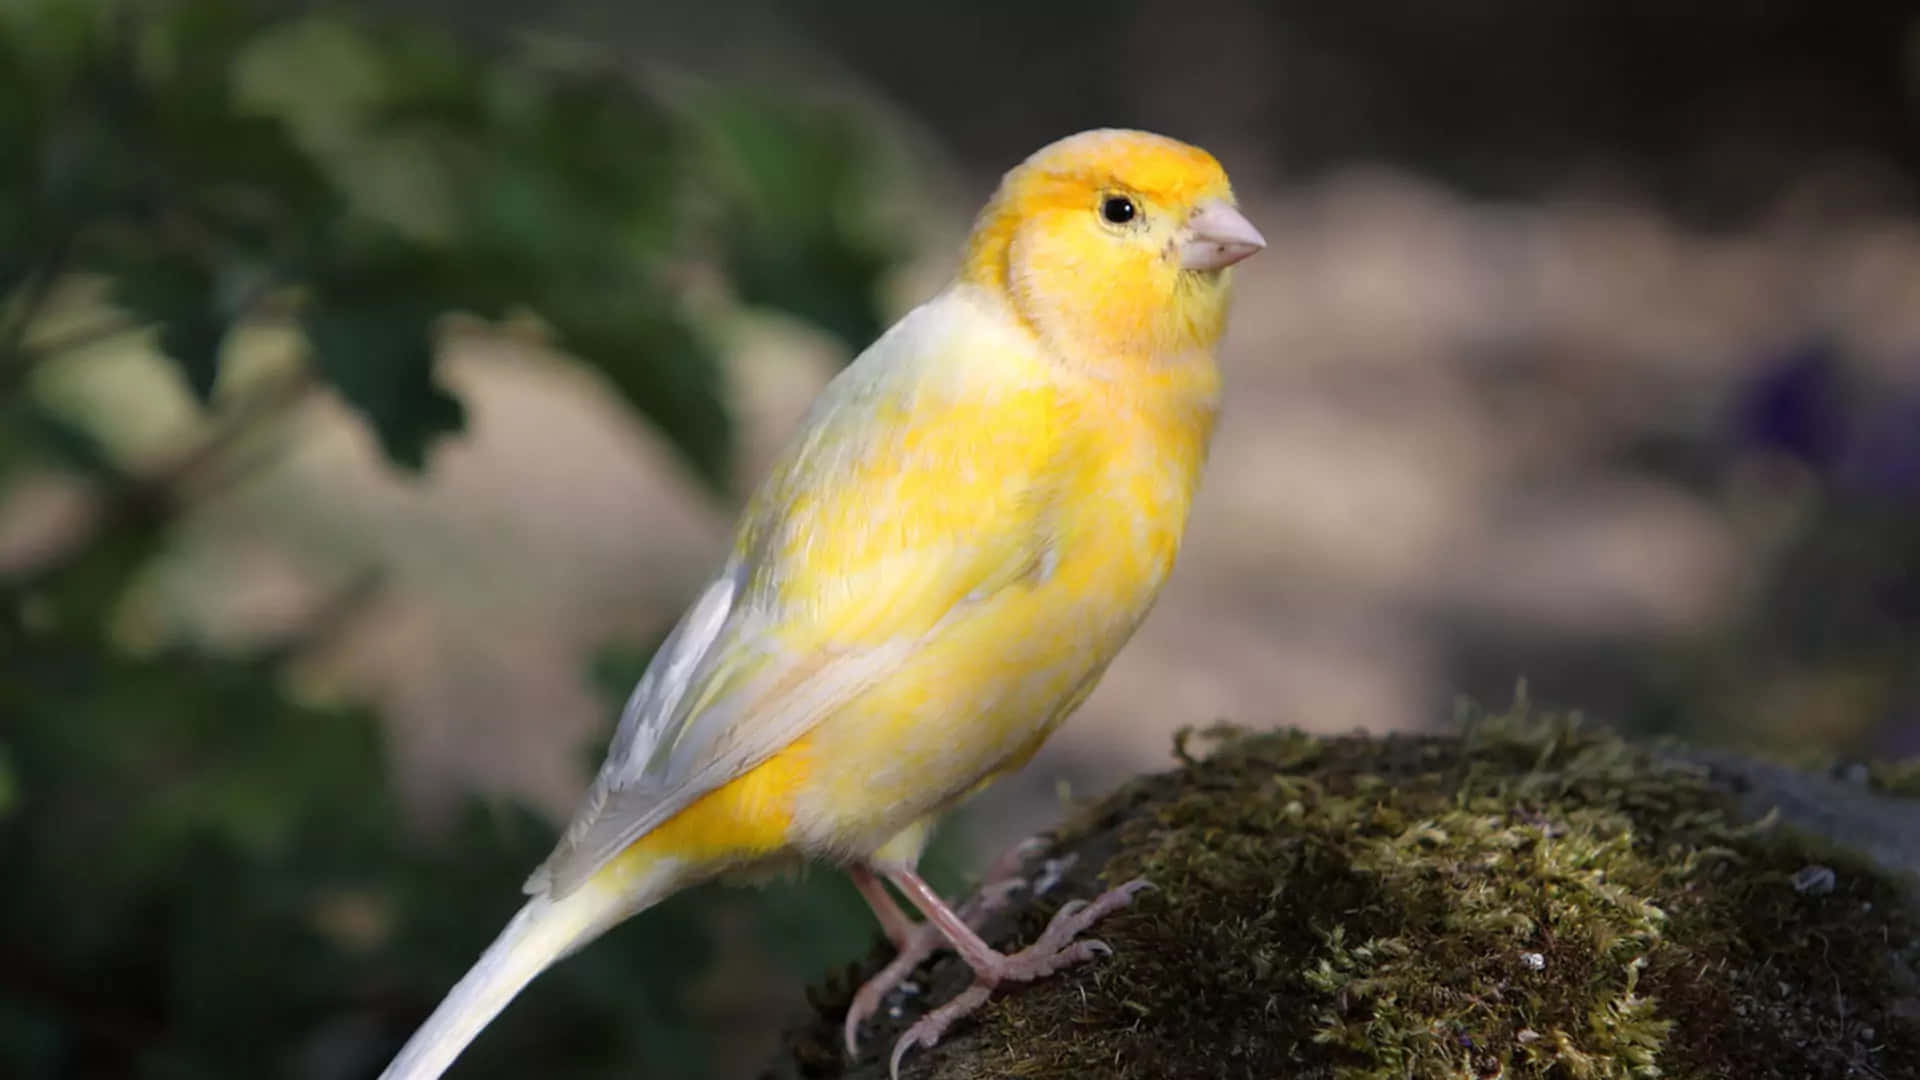 Beautiful Yellow Canary in its natural habitat Wallpaper